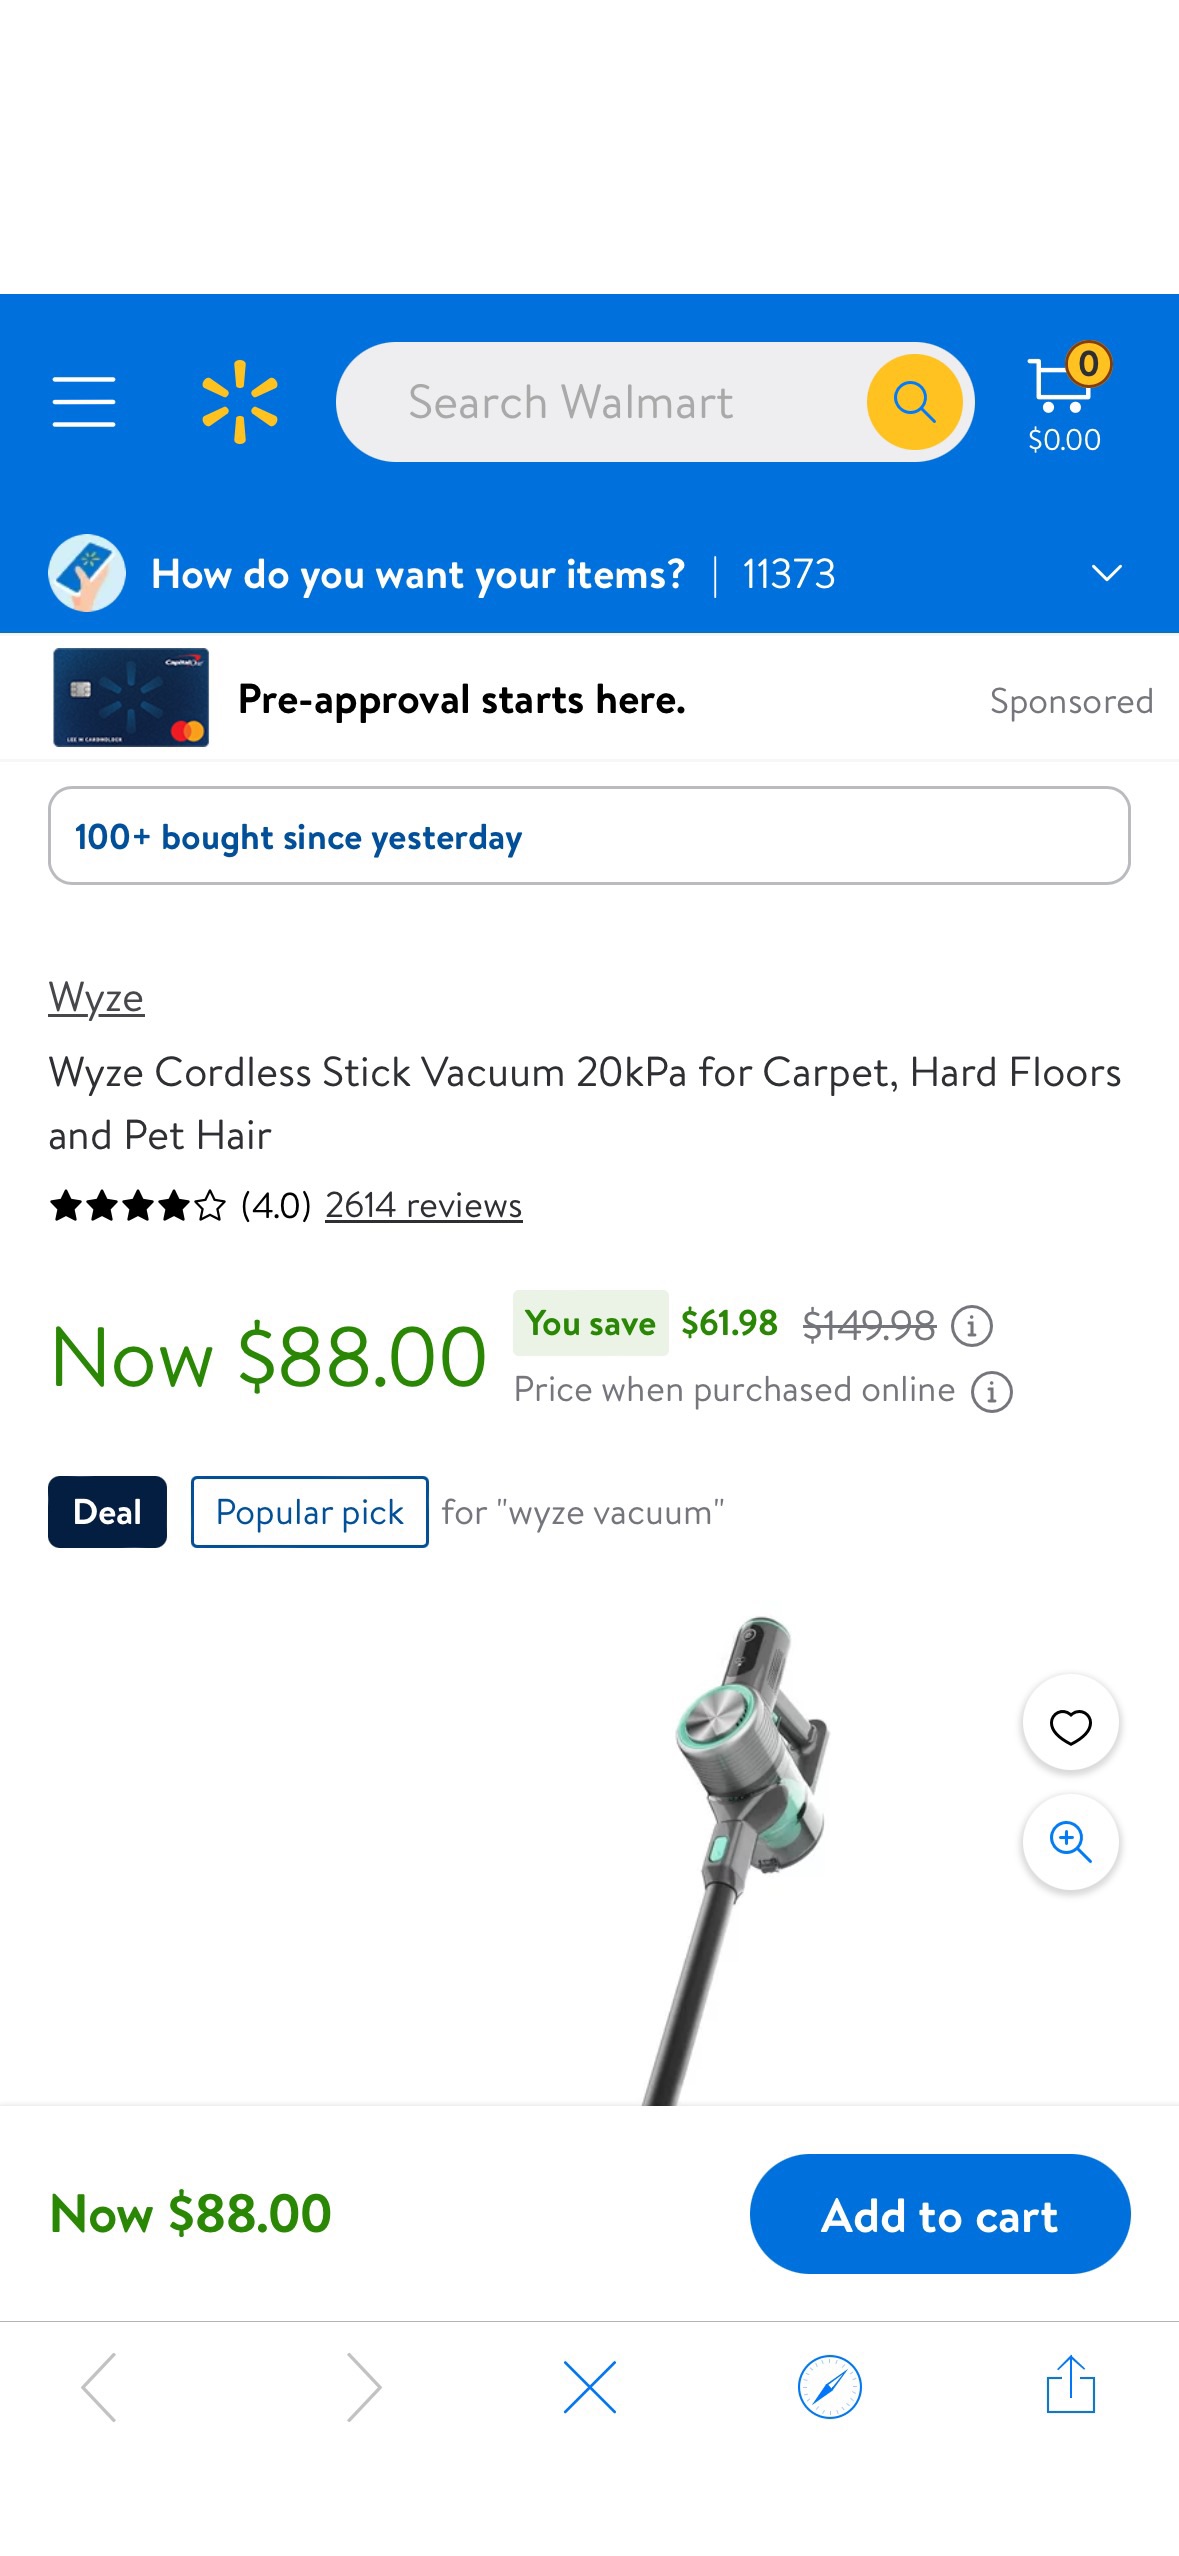 Wyze Cordless Stick Vacuum 20kPa for Carpet, Hard Floors and Pet Hair - Walmart.com